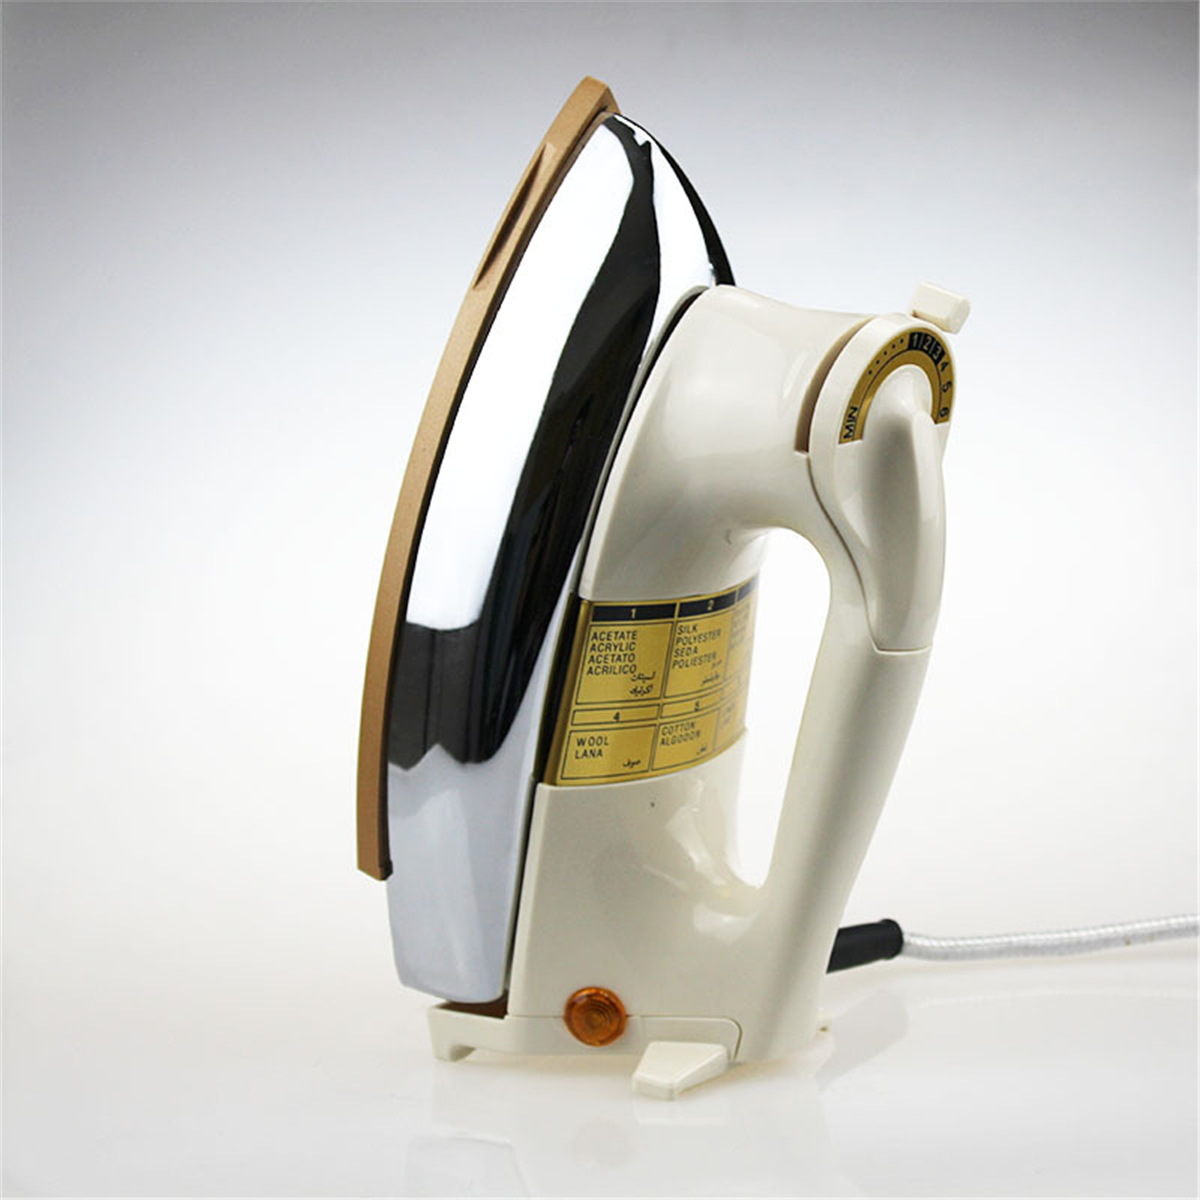 Handheld-Steam-Iron-Electric-Ironing-Machine-Portable-Travel-Home-Cloth-Garment-Steamer-1739502-3